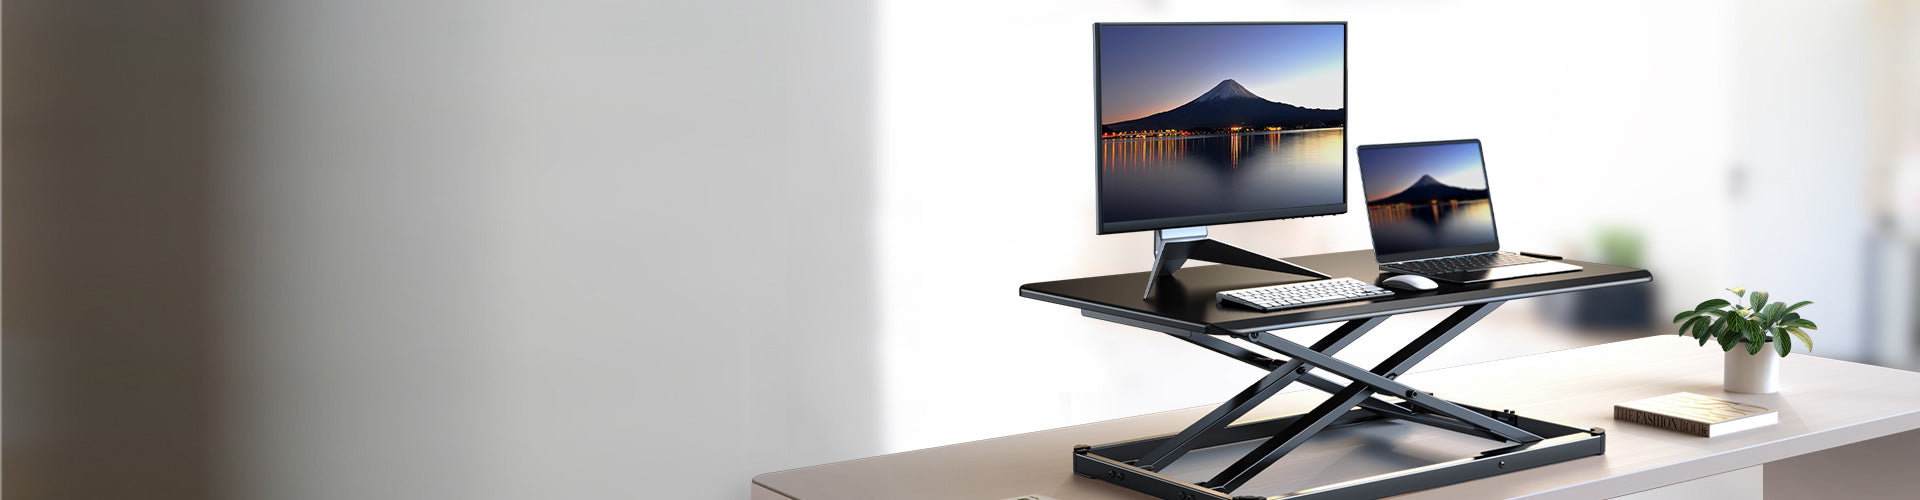 Adjustable Height Standing Desk Systems- v1.0